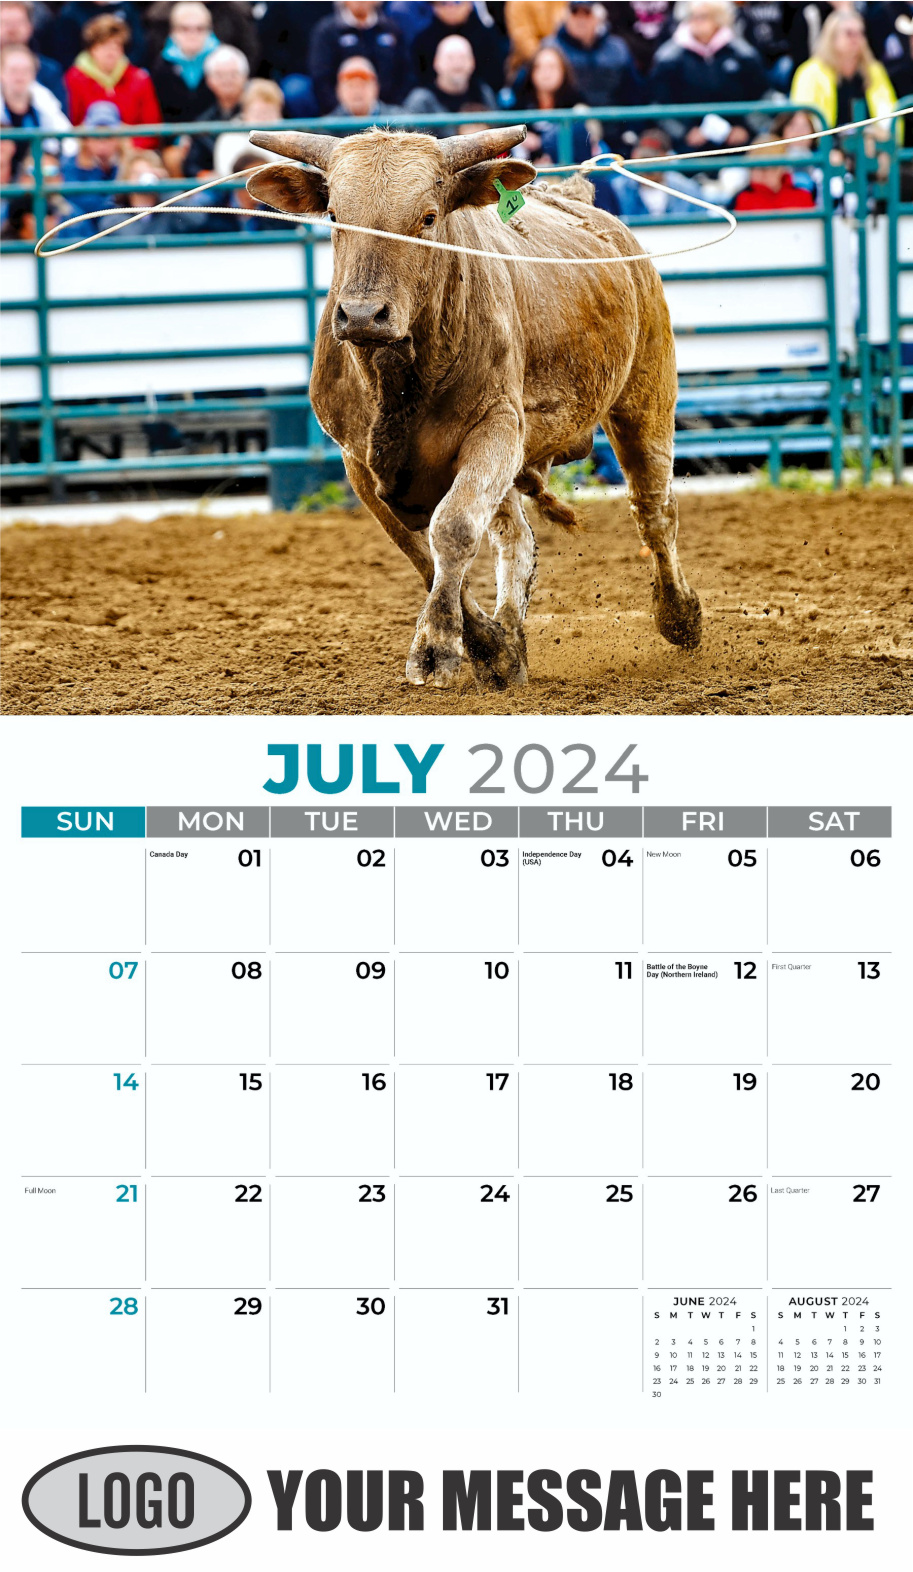 Country Spirit 2024 Business Advertising Calendar - July